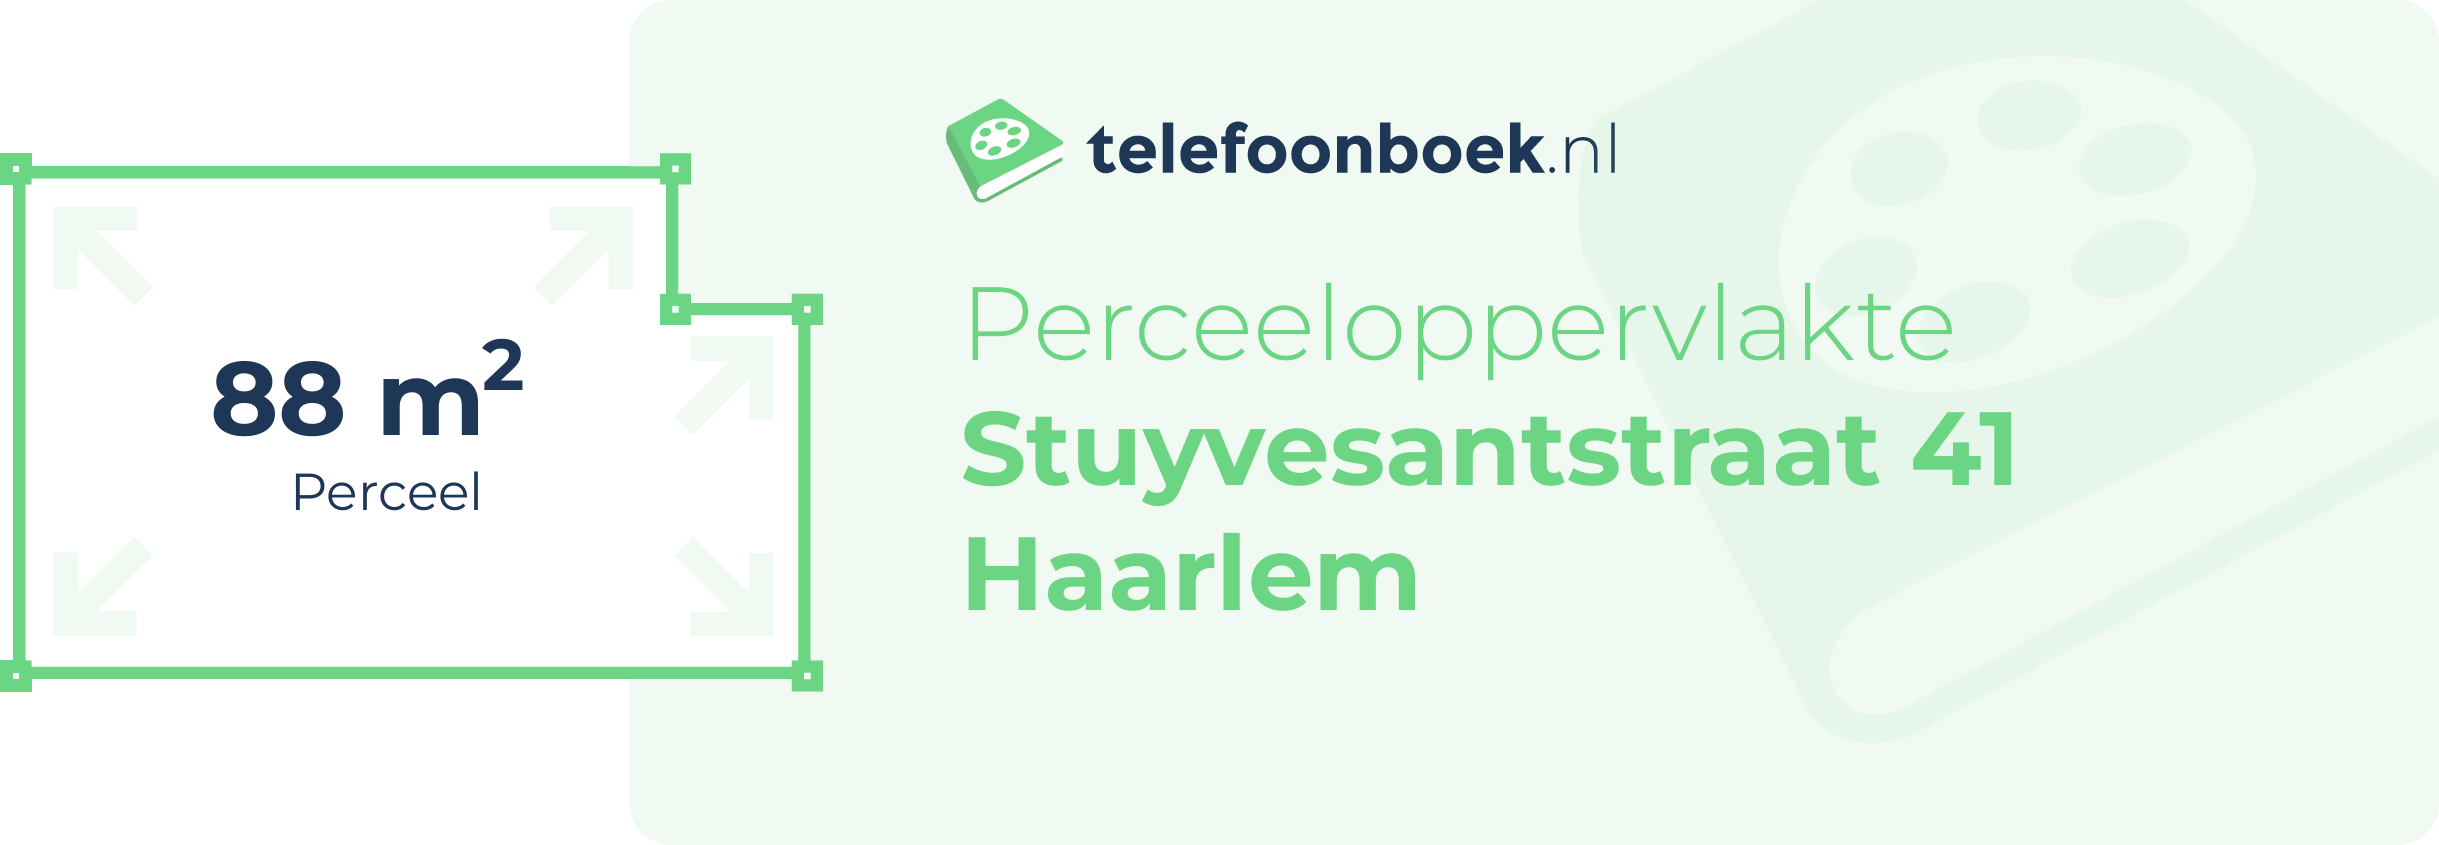 Perceeloppervlakte Stuyvesantstraat 41 Haarlem